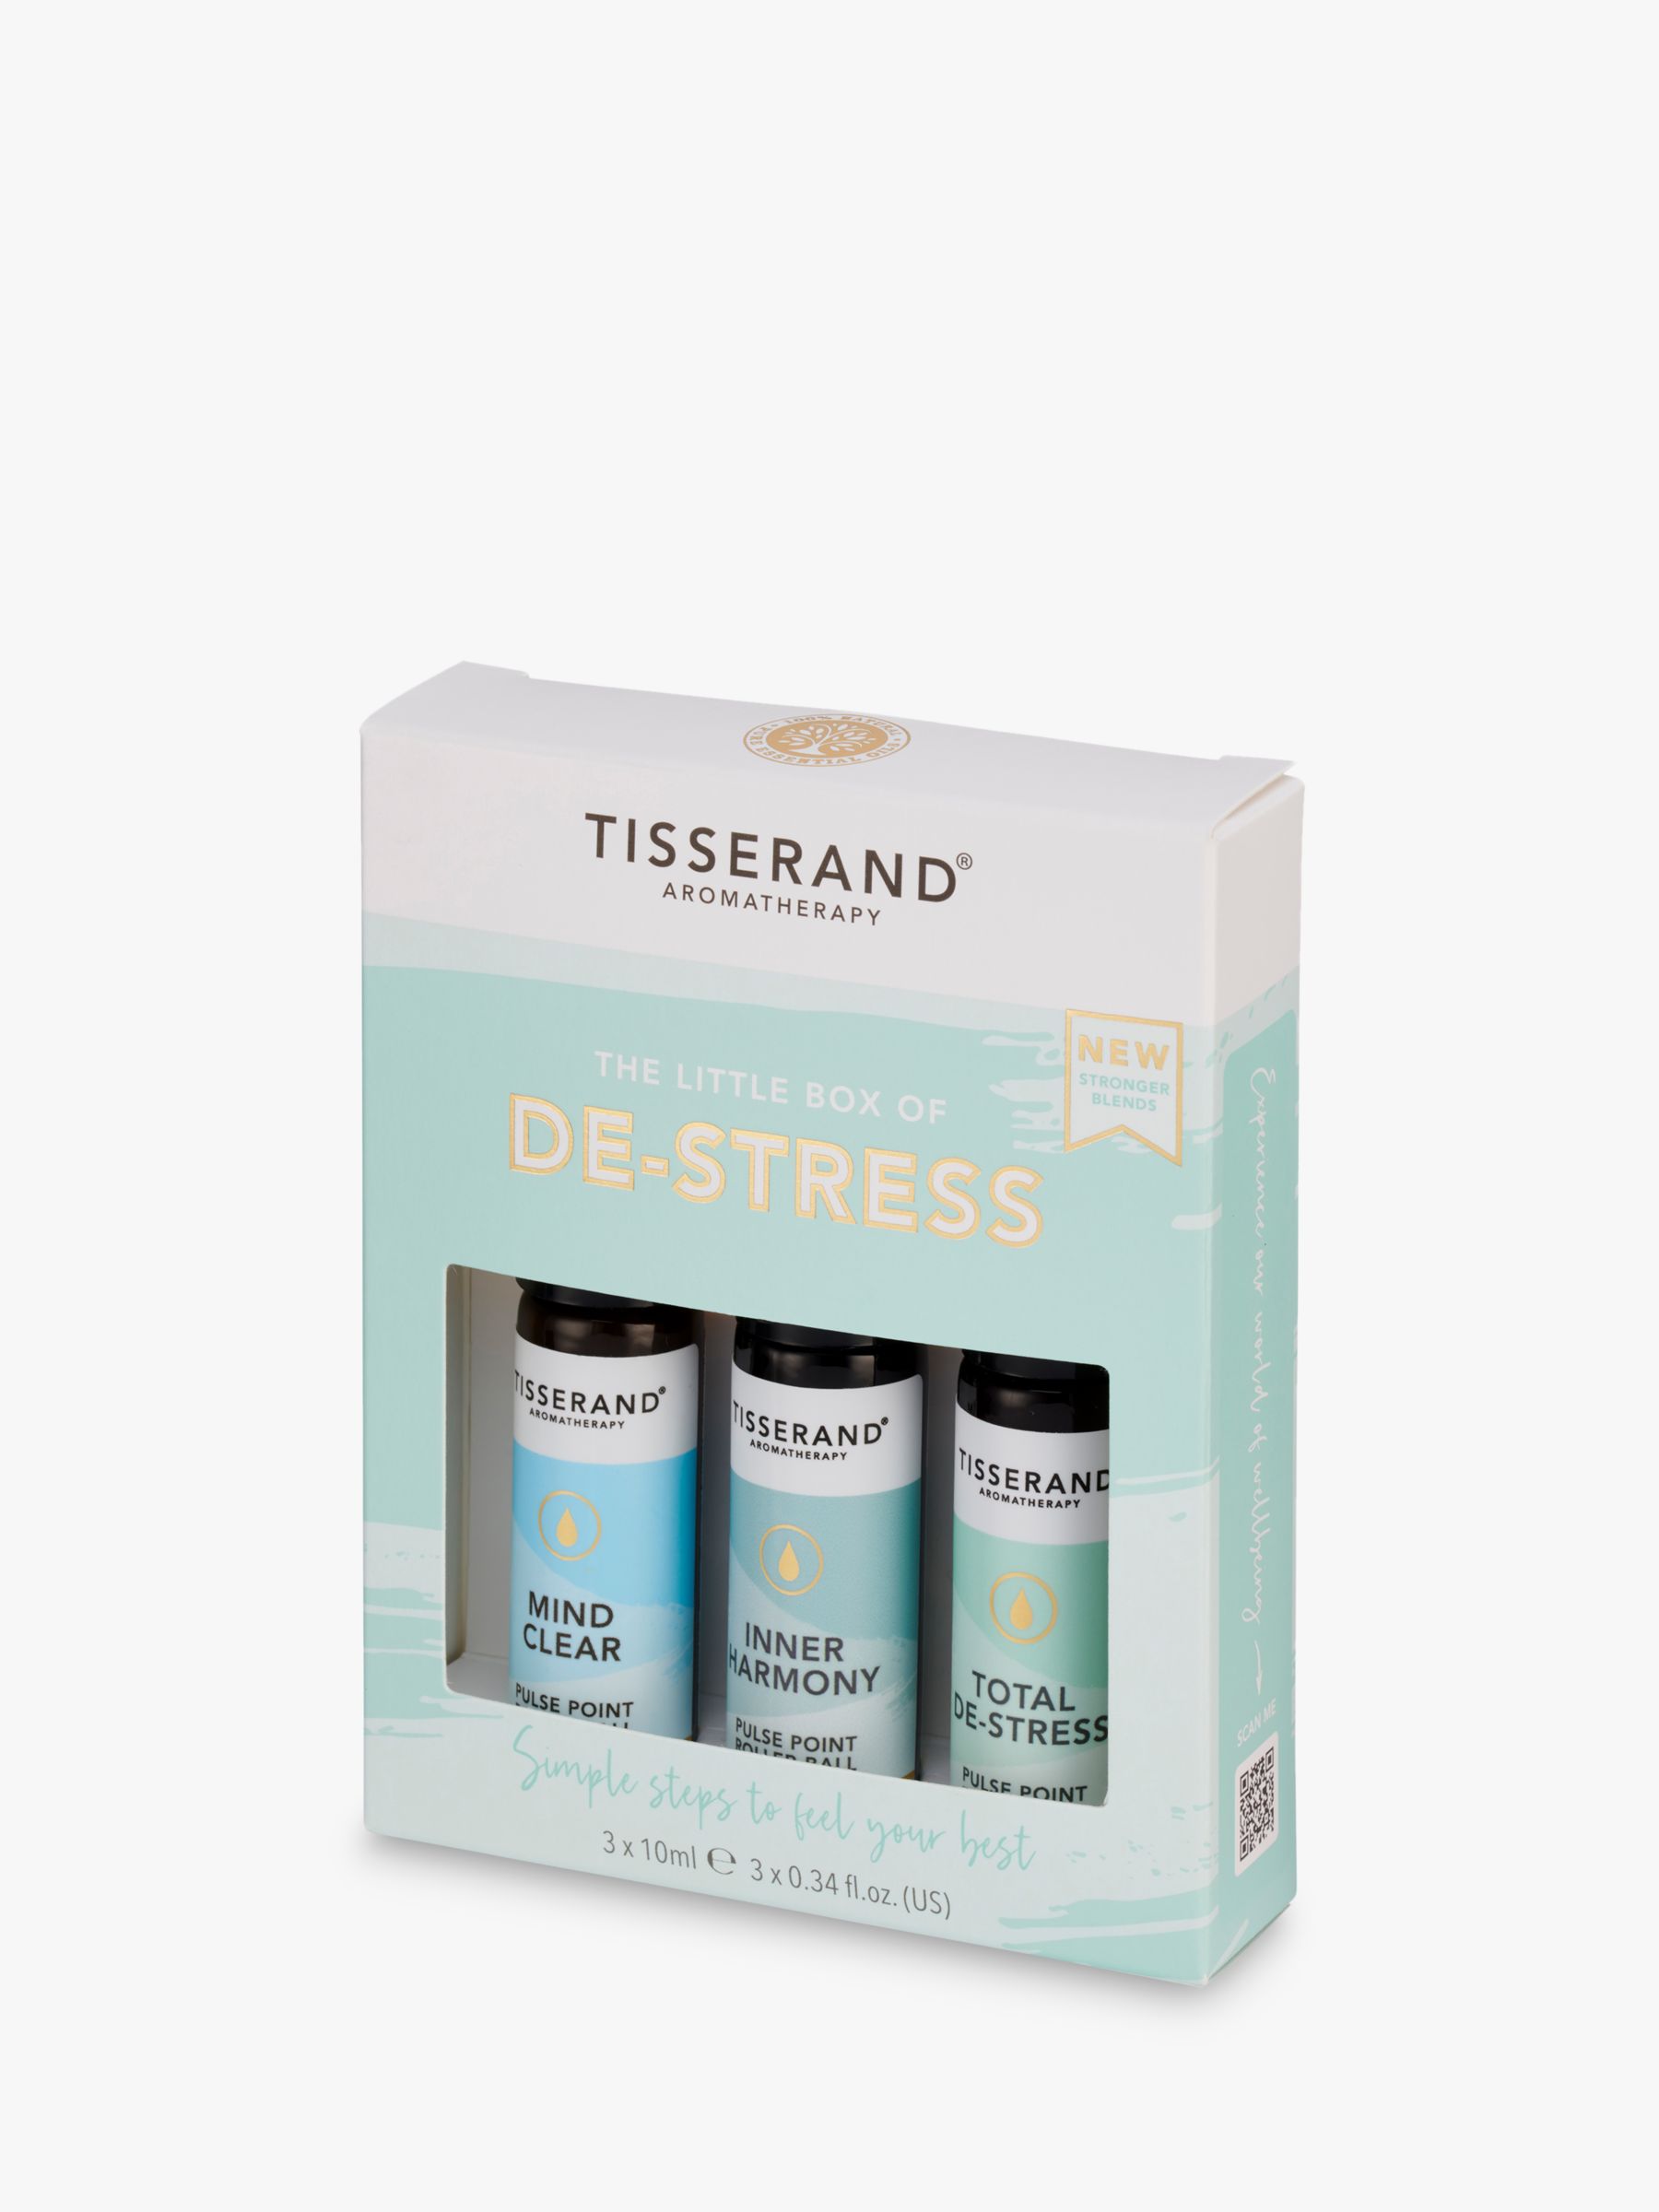 Tisserand Aromatherapy The Little Box of De-Stress Bodycare Gift Set